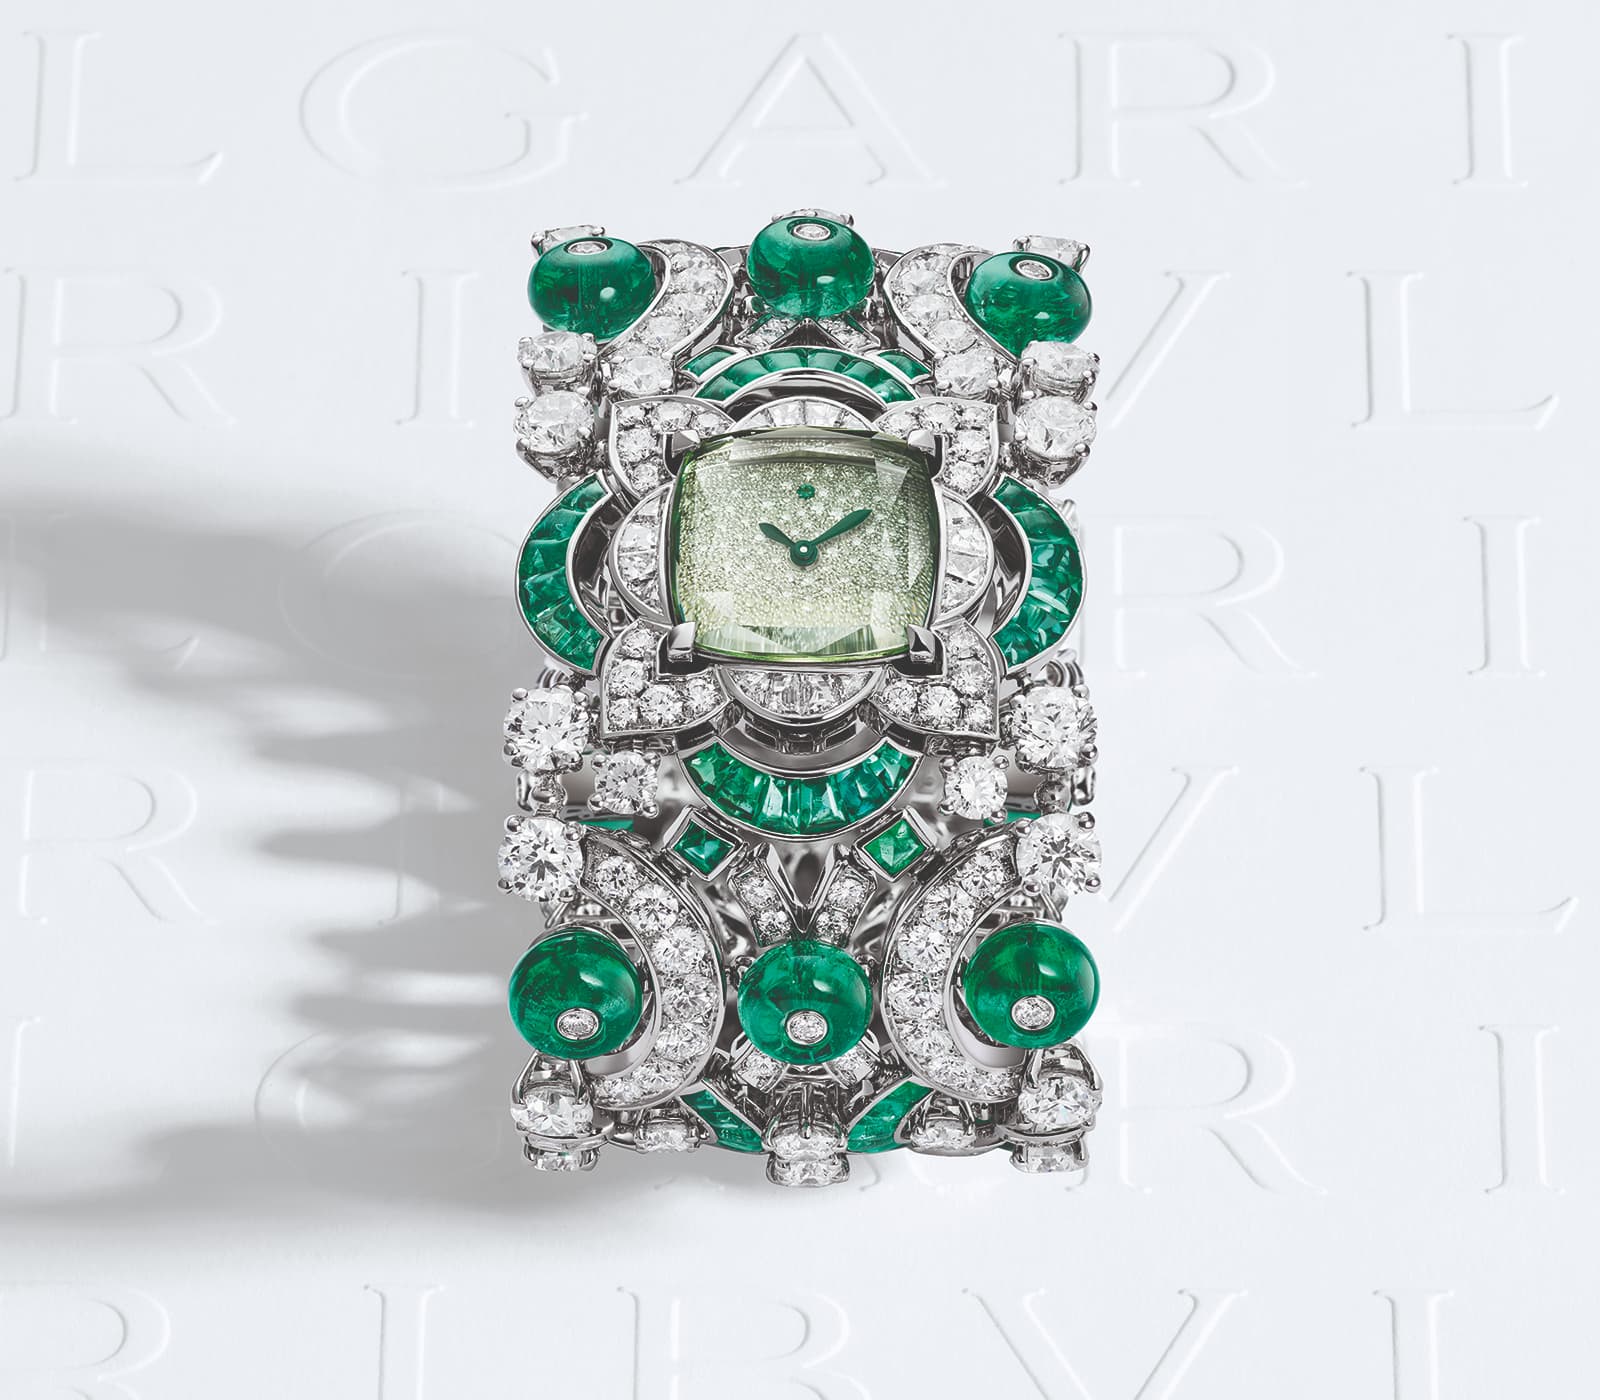 Bulgari Emerald Venus High Jewellery Watch in emeralds, mint-green tourmaline and diamonds